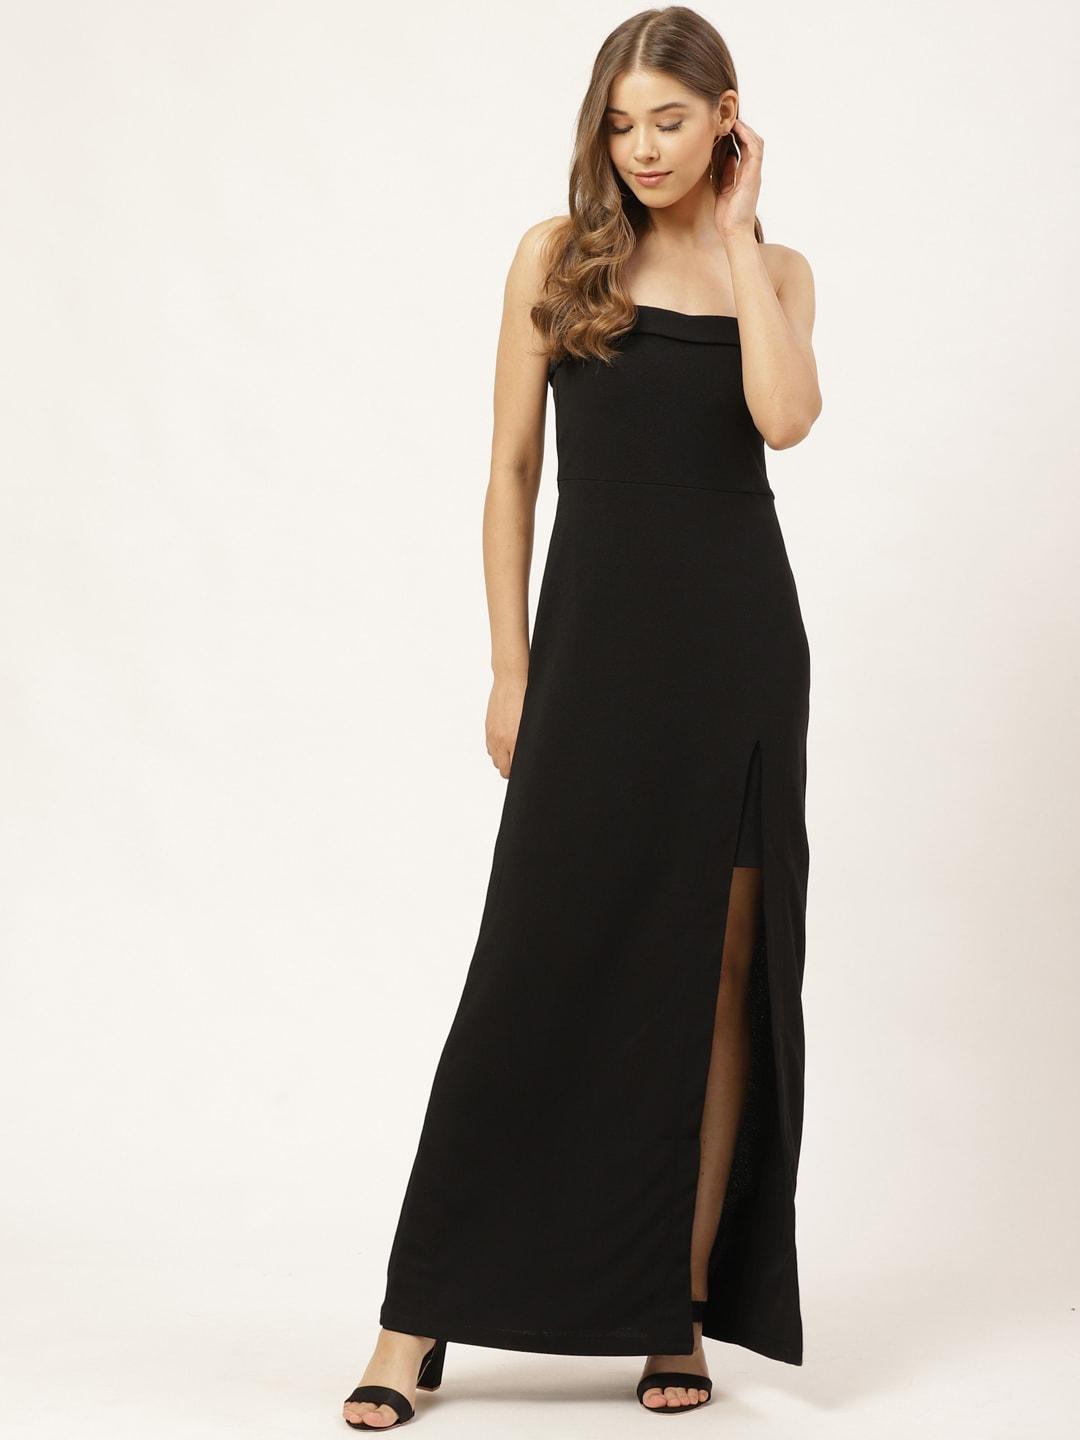 20dresses women black strapless thigh-high slit solid maxi dress